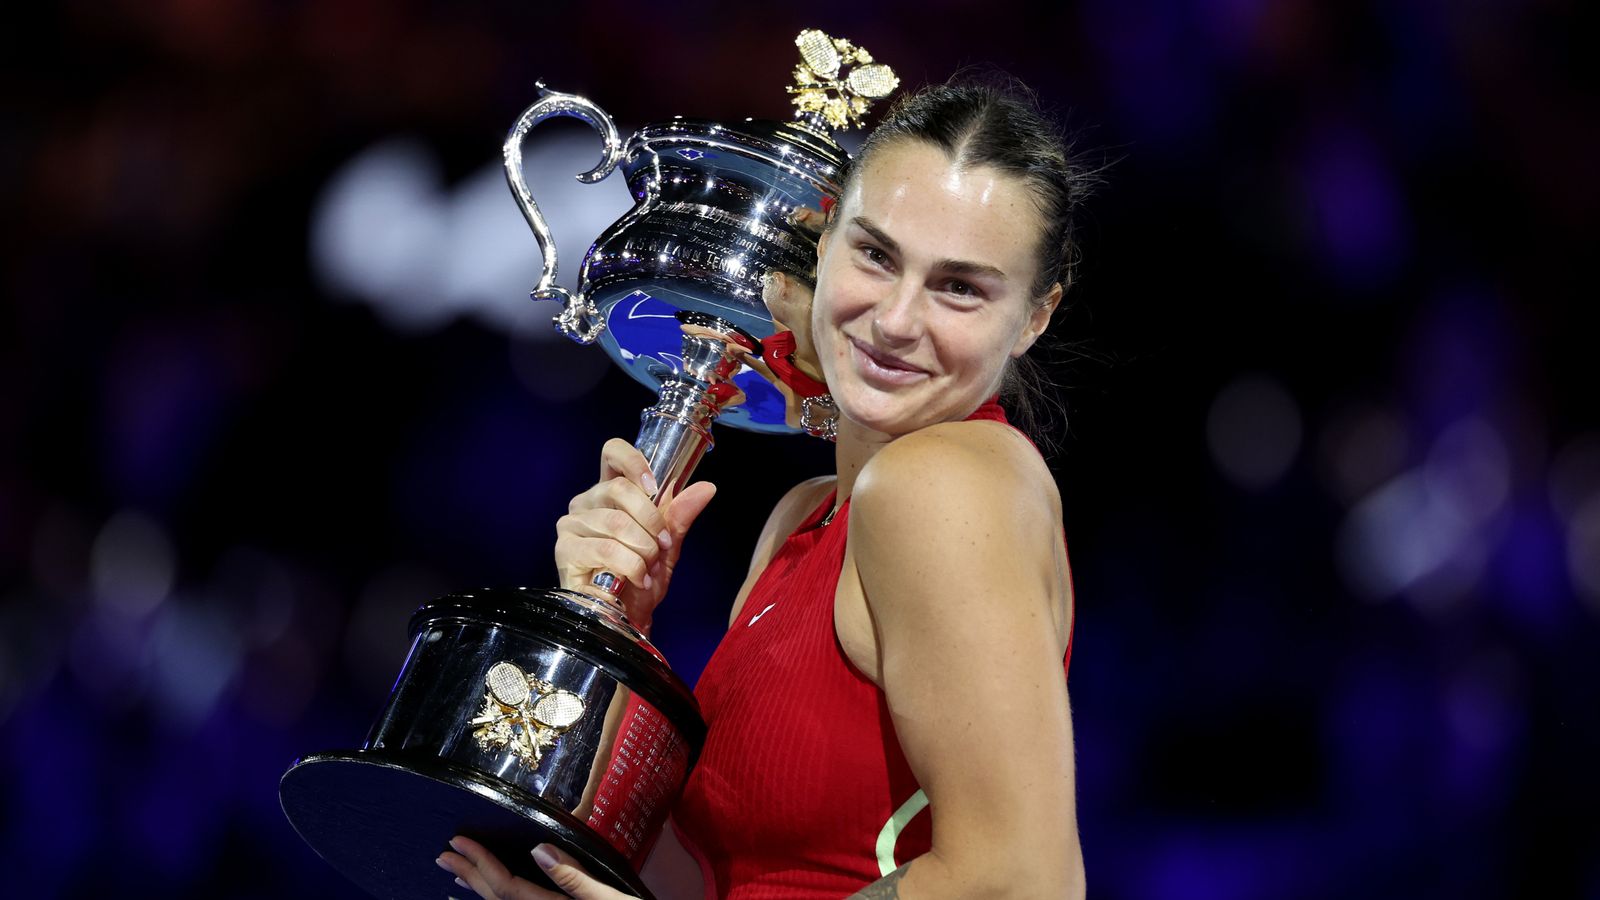 Australian Open Aryna Sabalenka successfully defends her title in